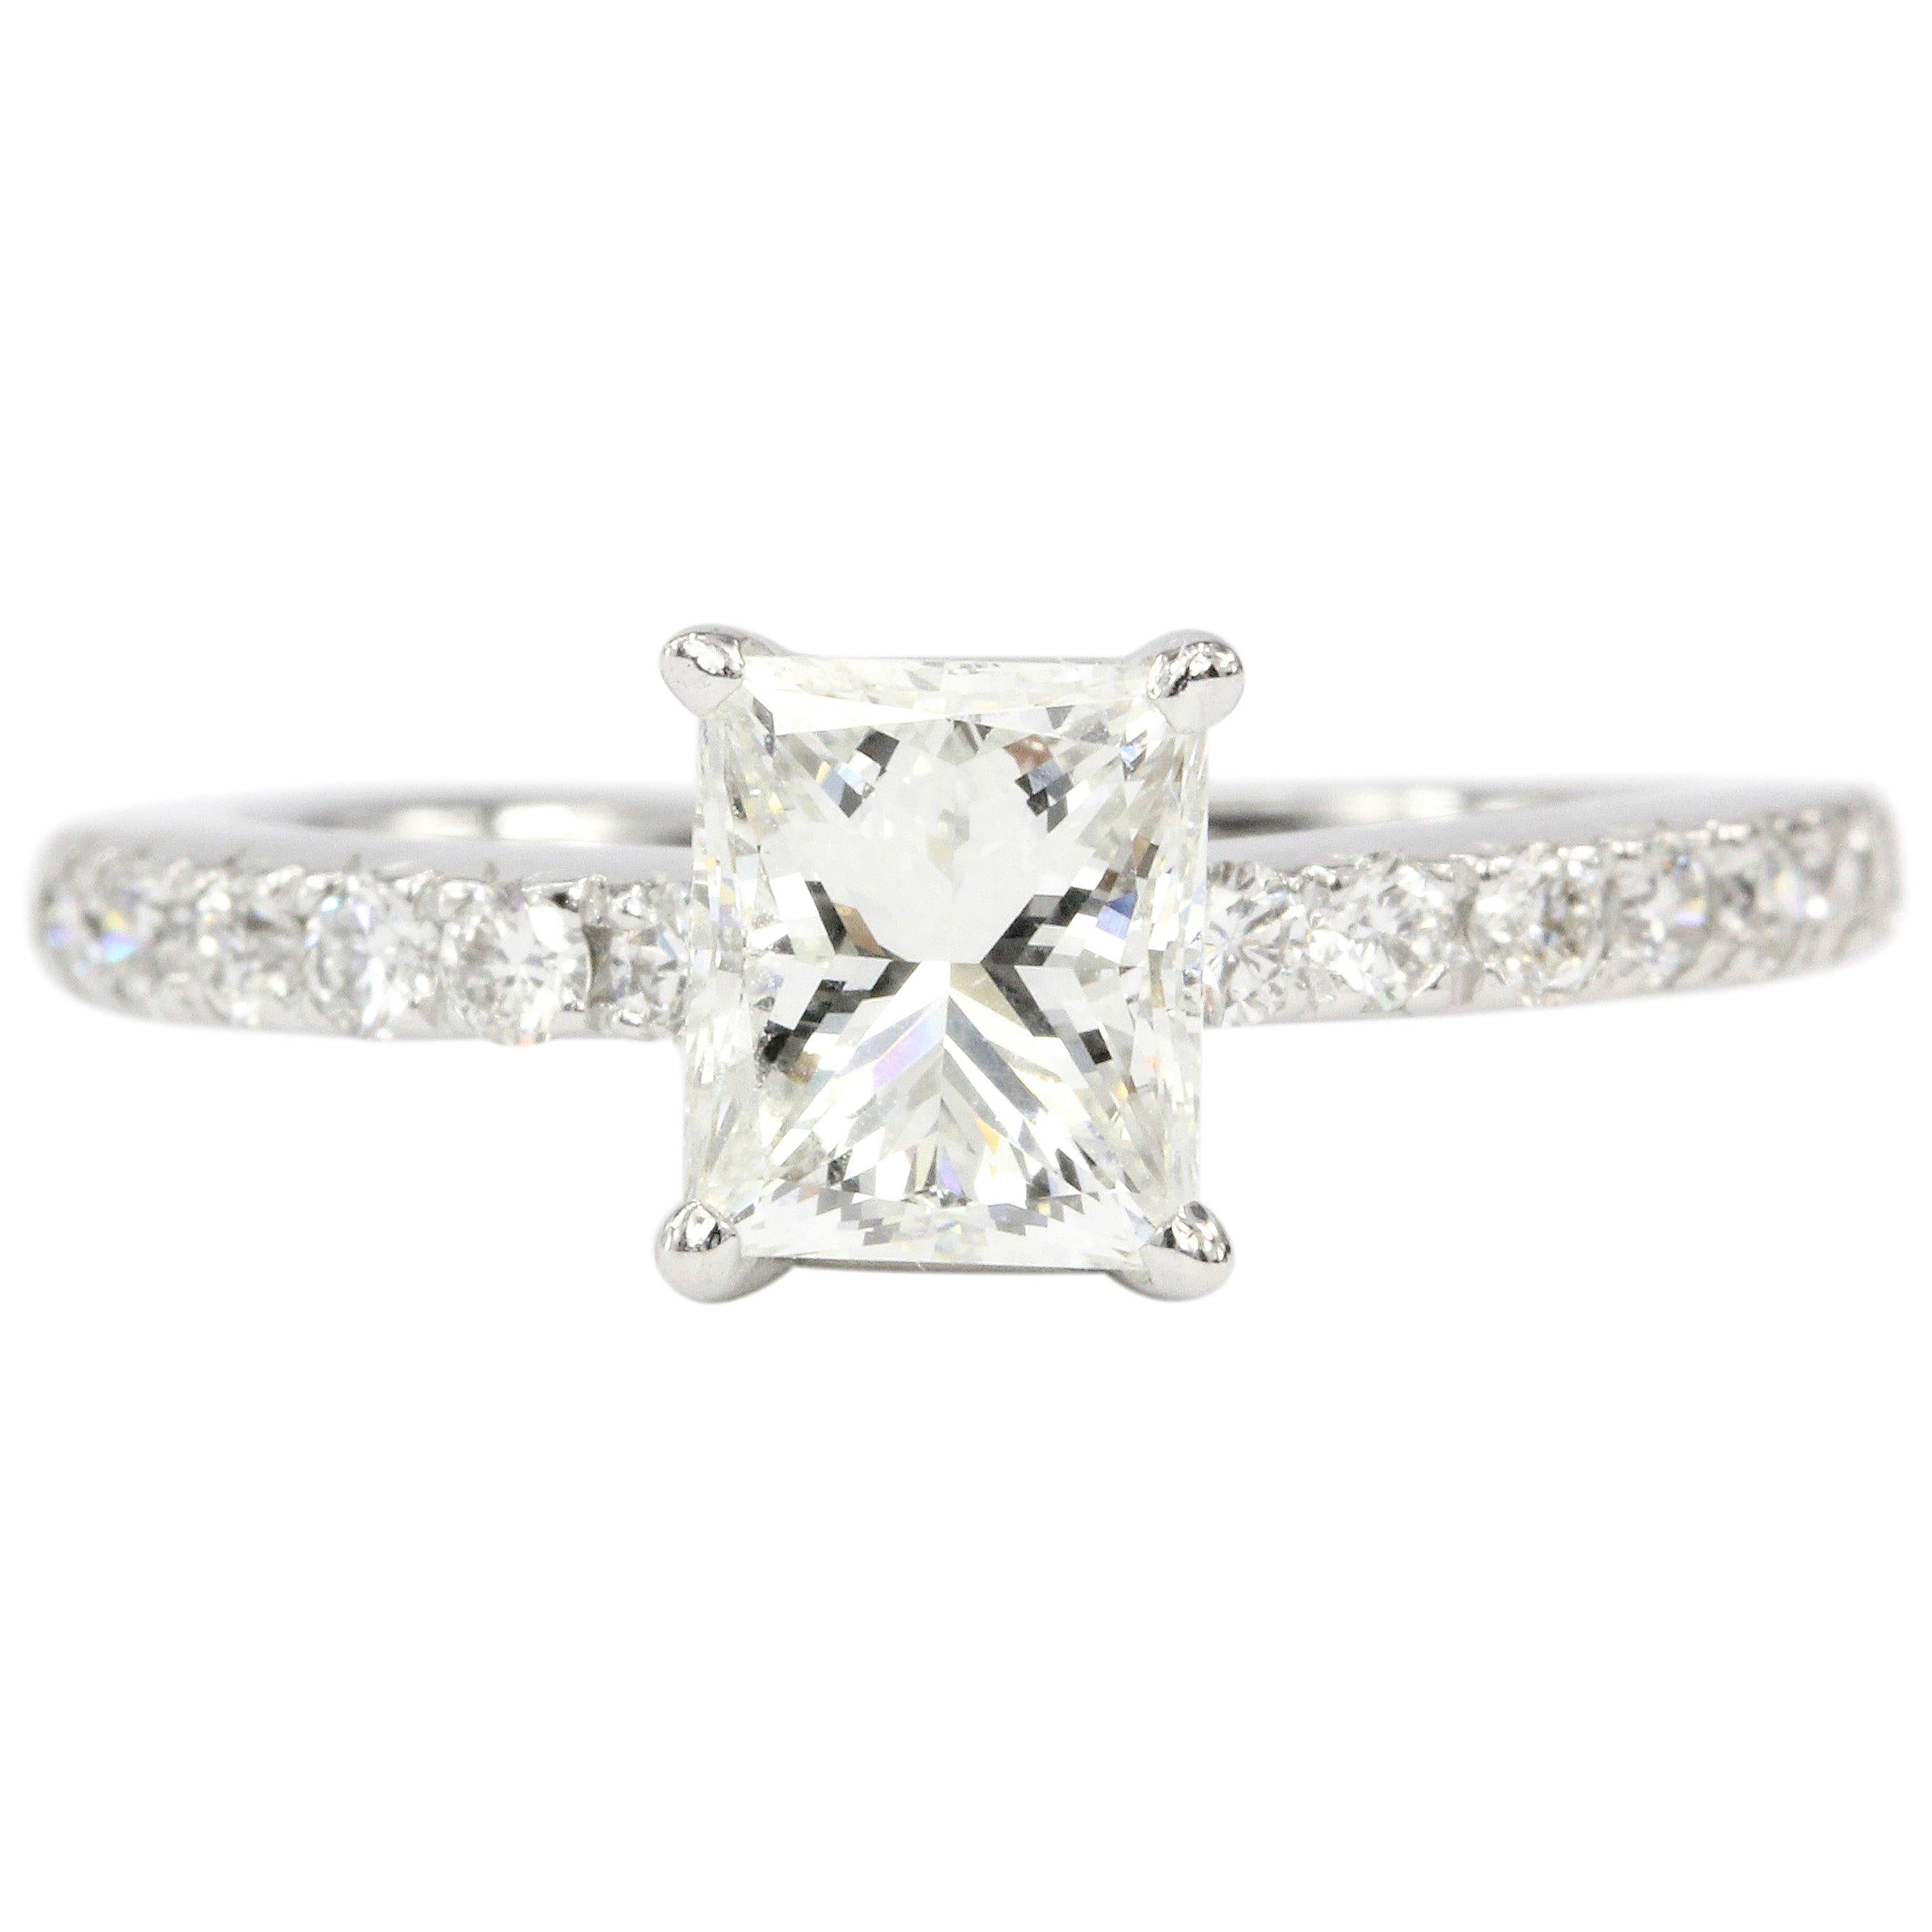 White Gold 1.11 Carat Princess Cut Diamond Engagement Ring